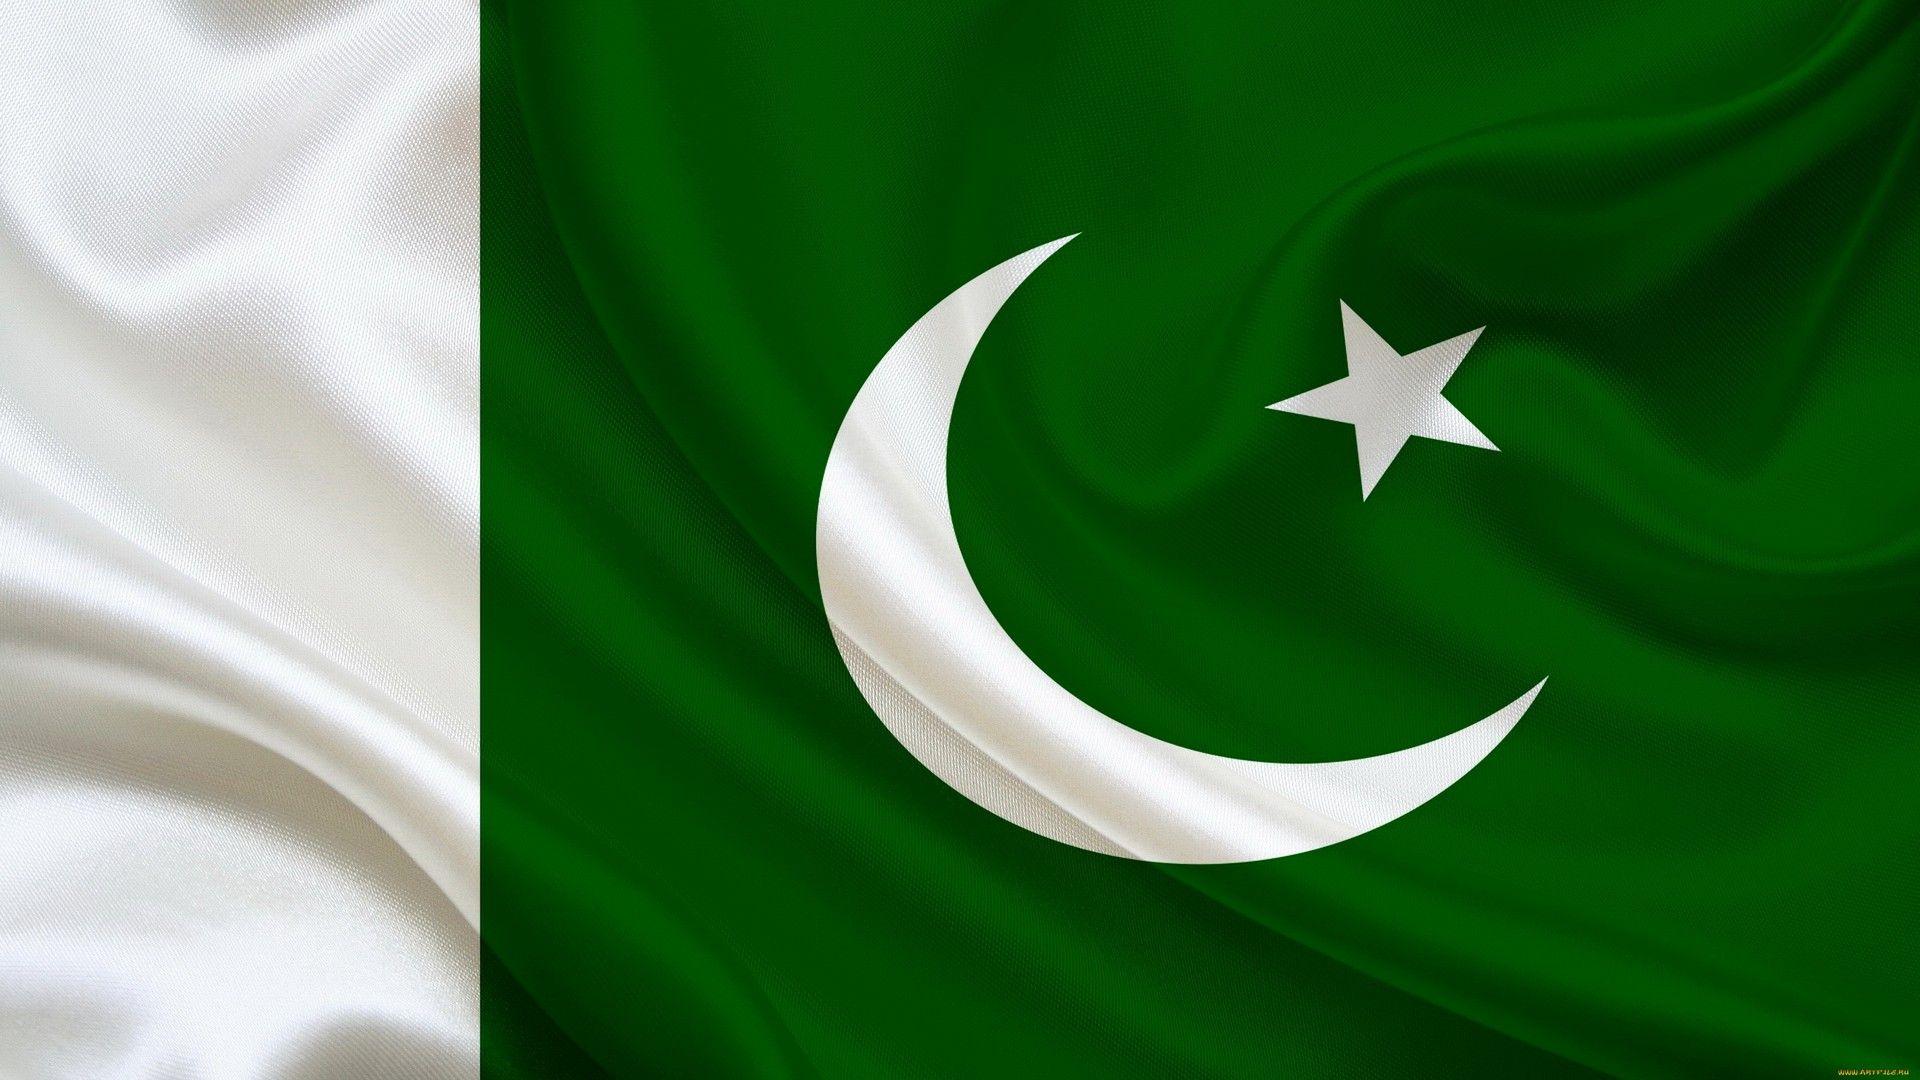 Flag of Pakistan wallpaper. Flags wallpaper. Pakistan